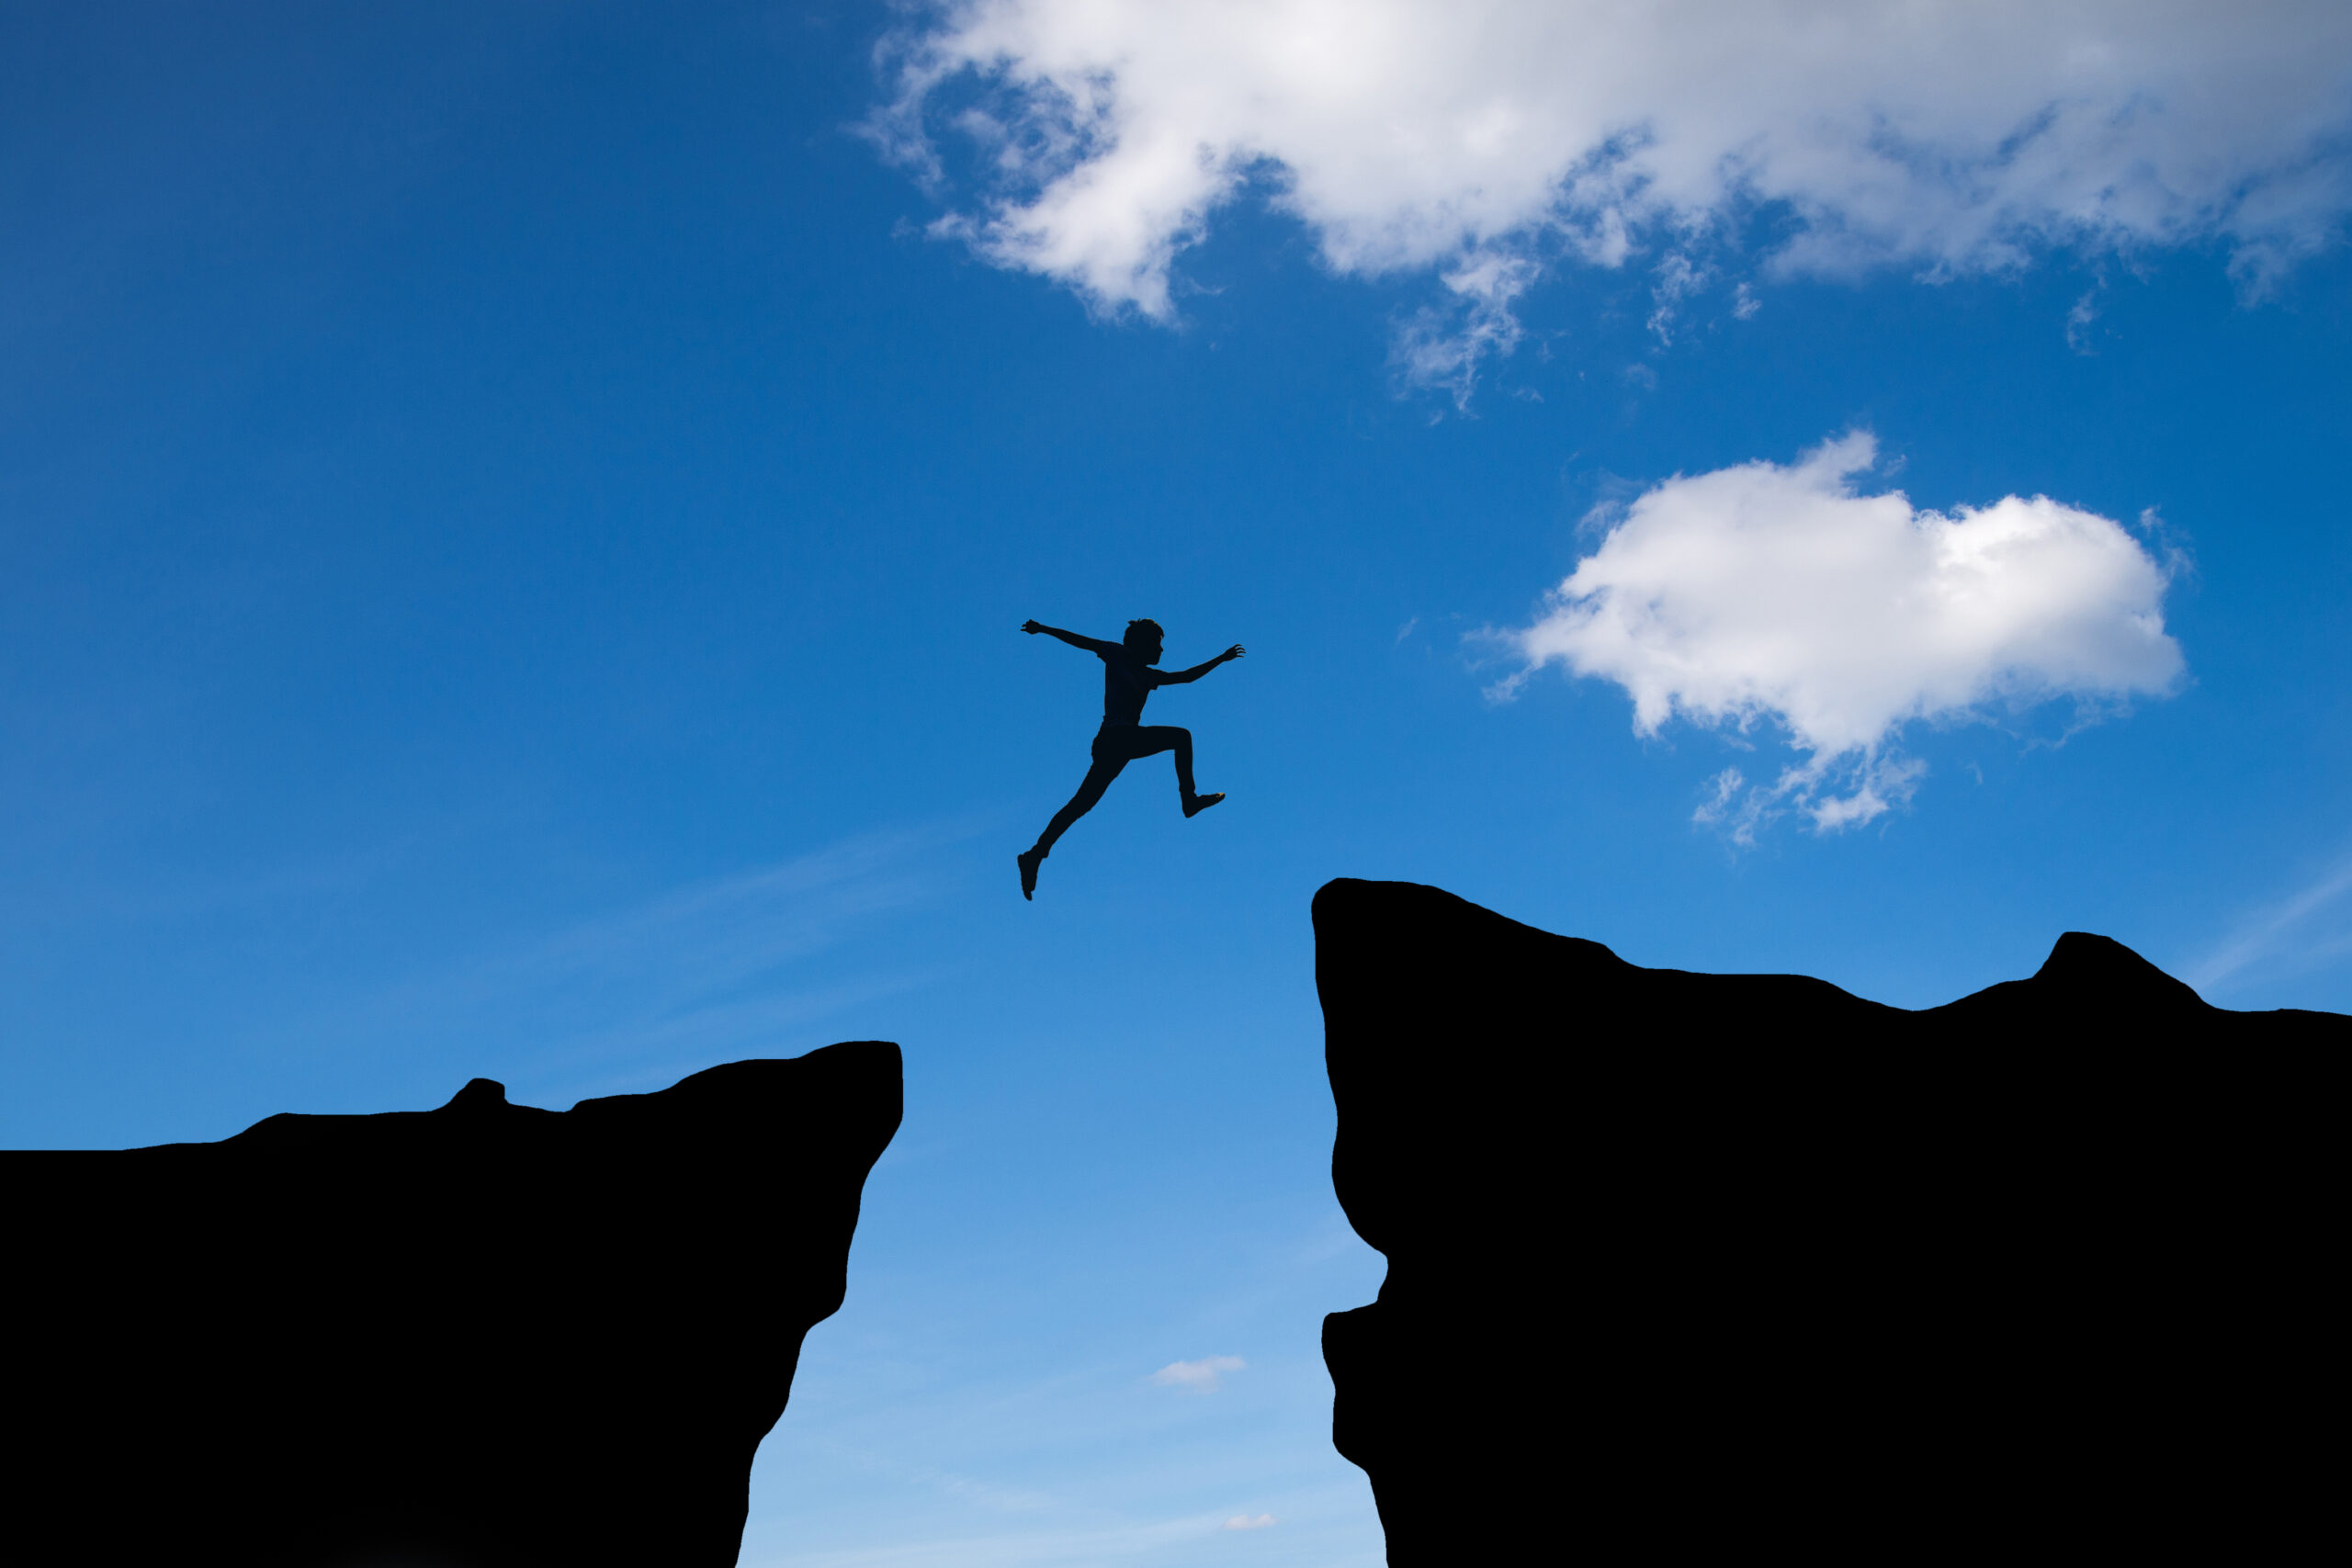 Man jump through the gap between hill.man jumping over cliff on blue sky ,Business concept idea